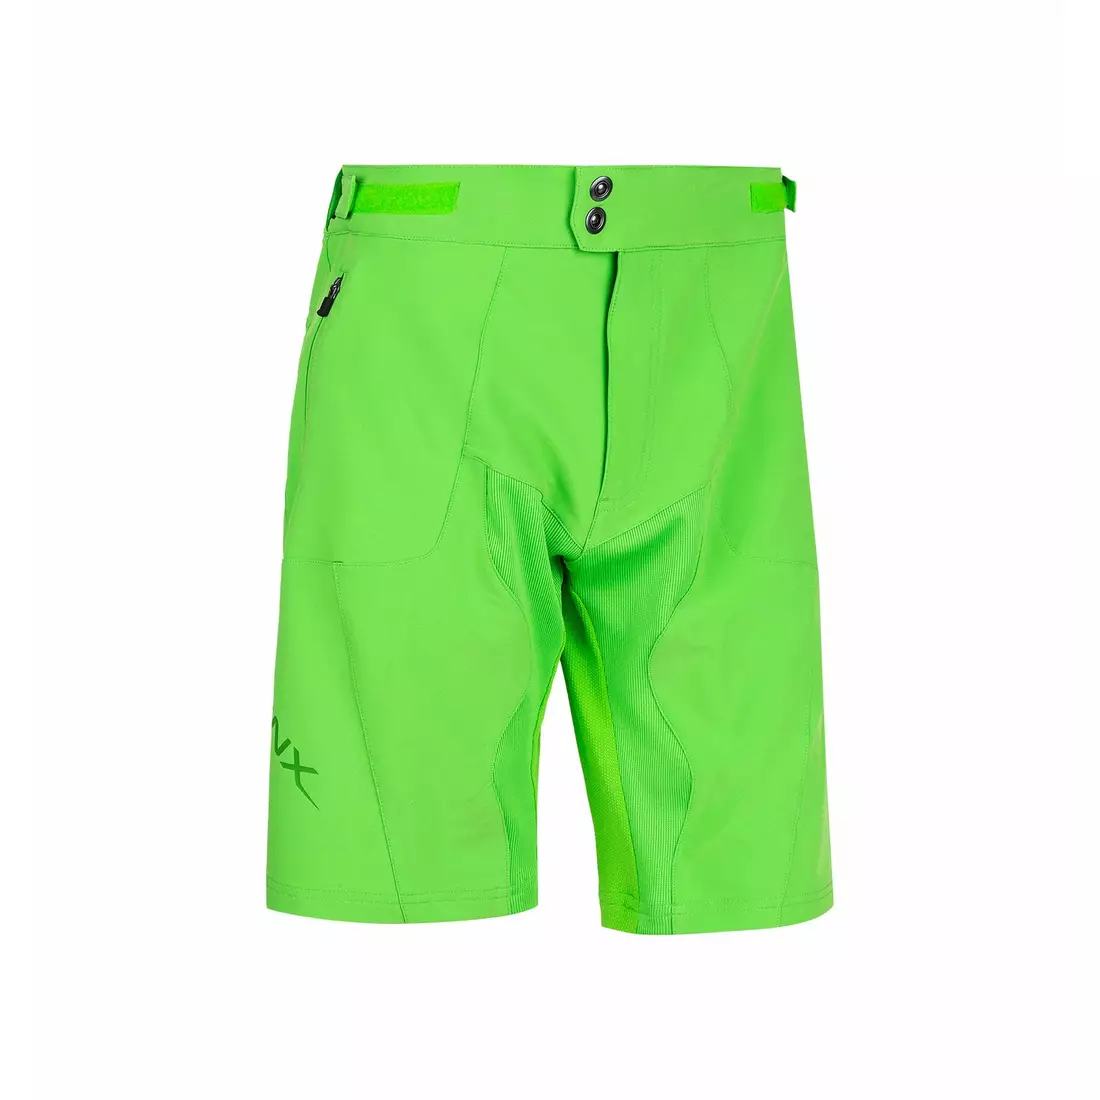 ENDURANCE LEICHHARDT men's MTB shorts with boxers green E181374